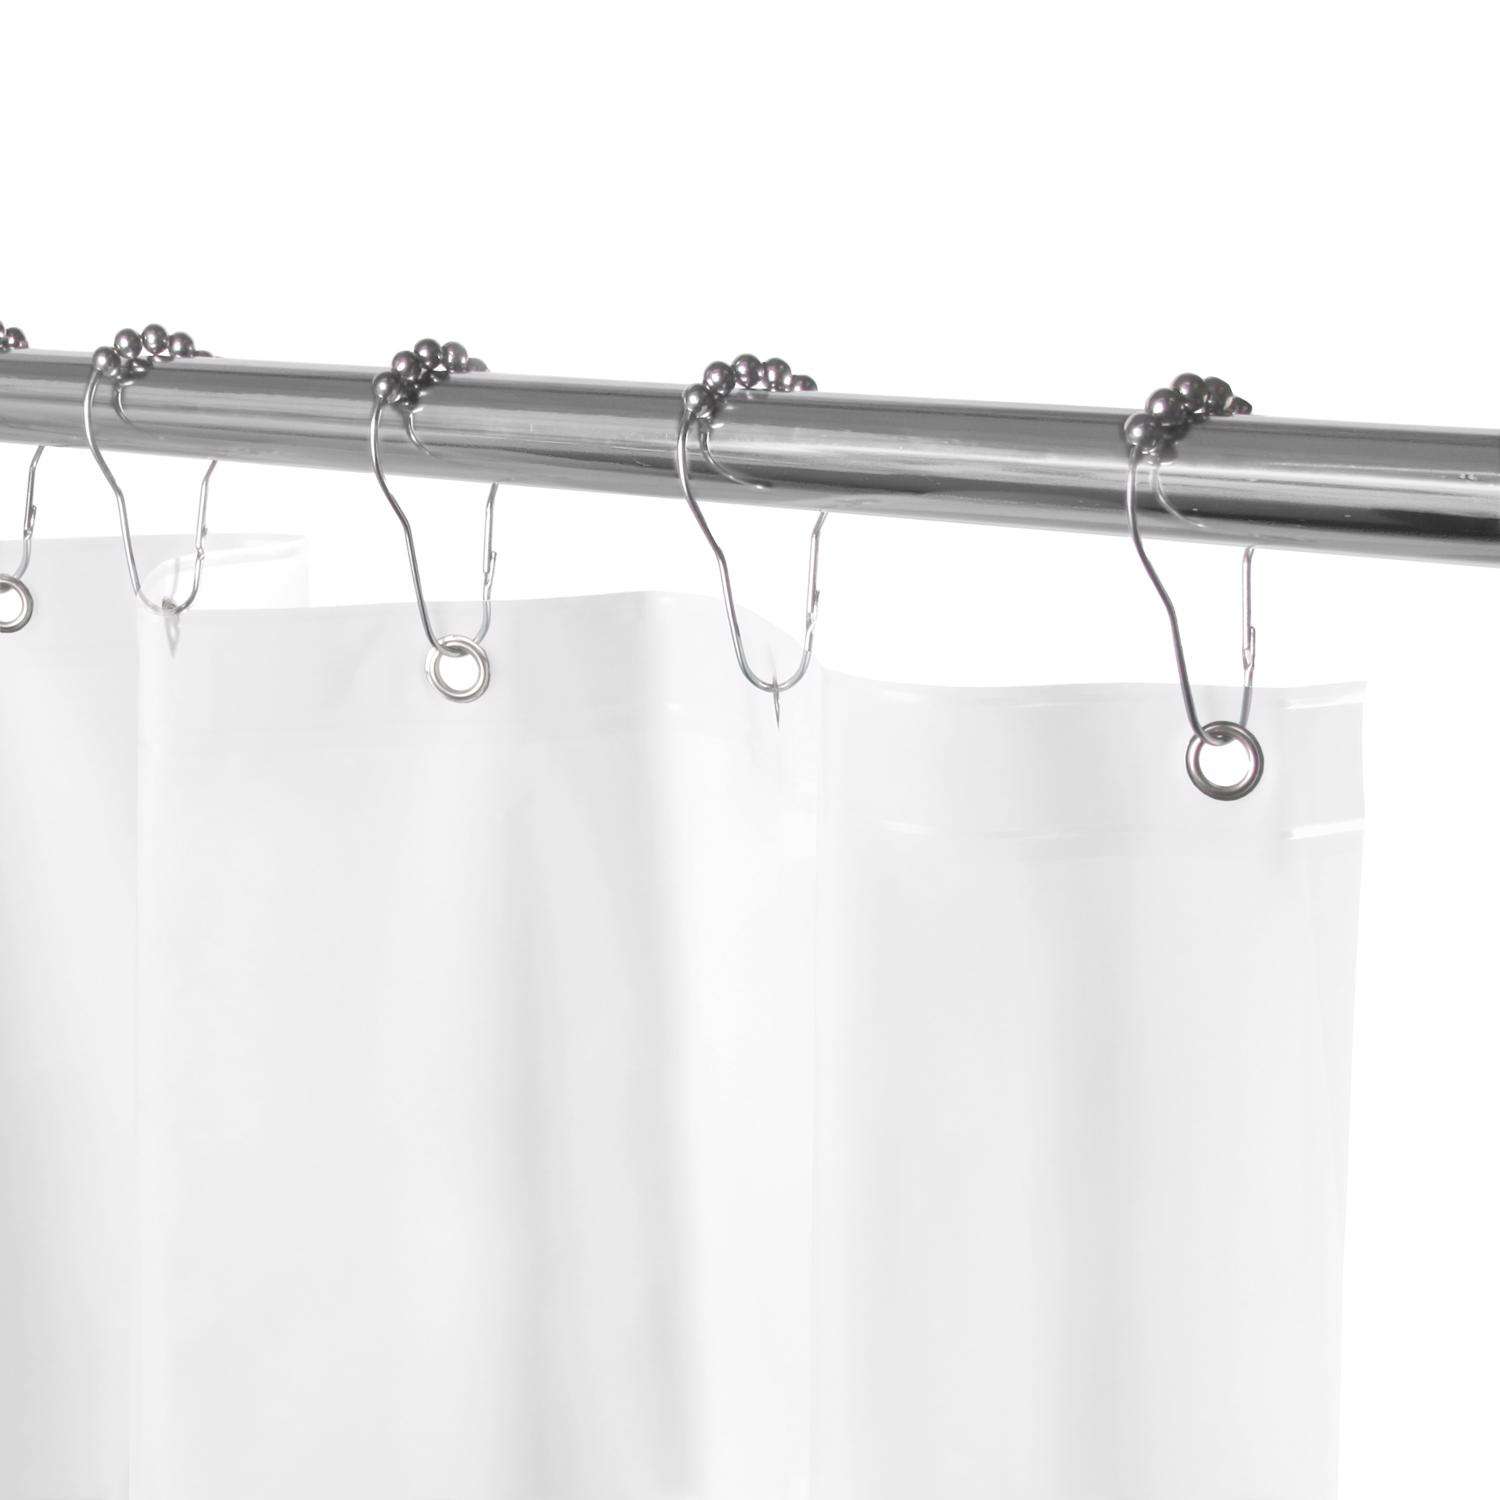 Kenney 2 Shelf Hanging Shower Caddy White